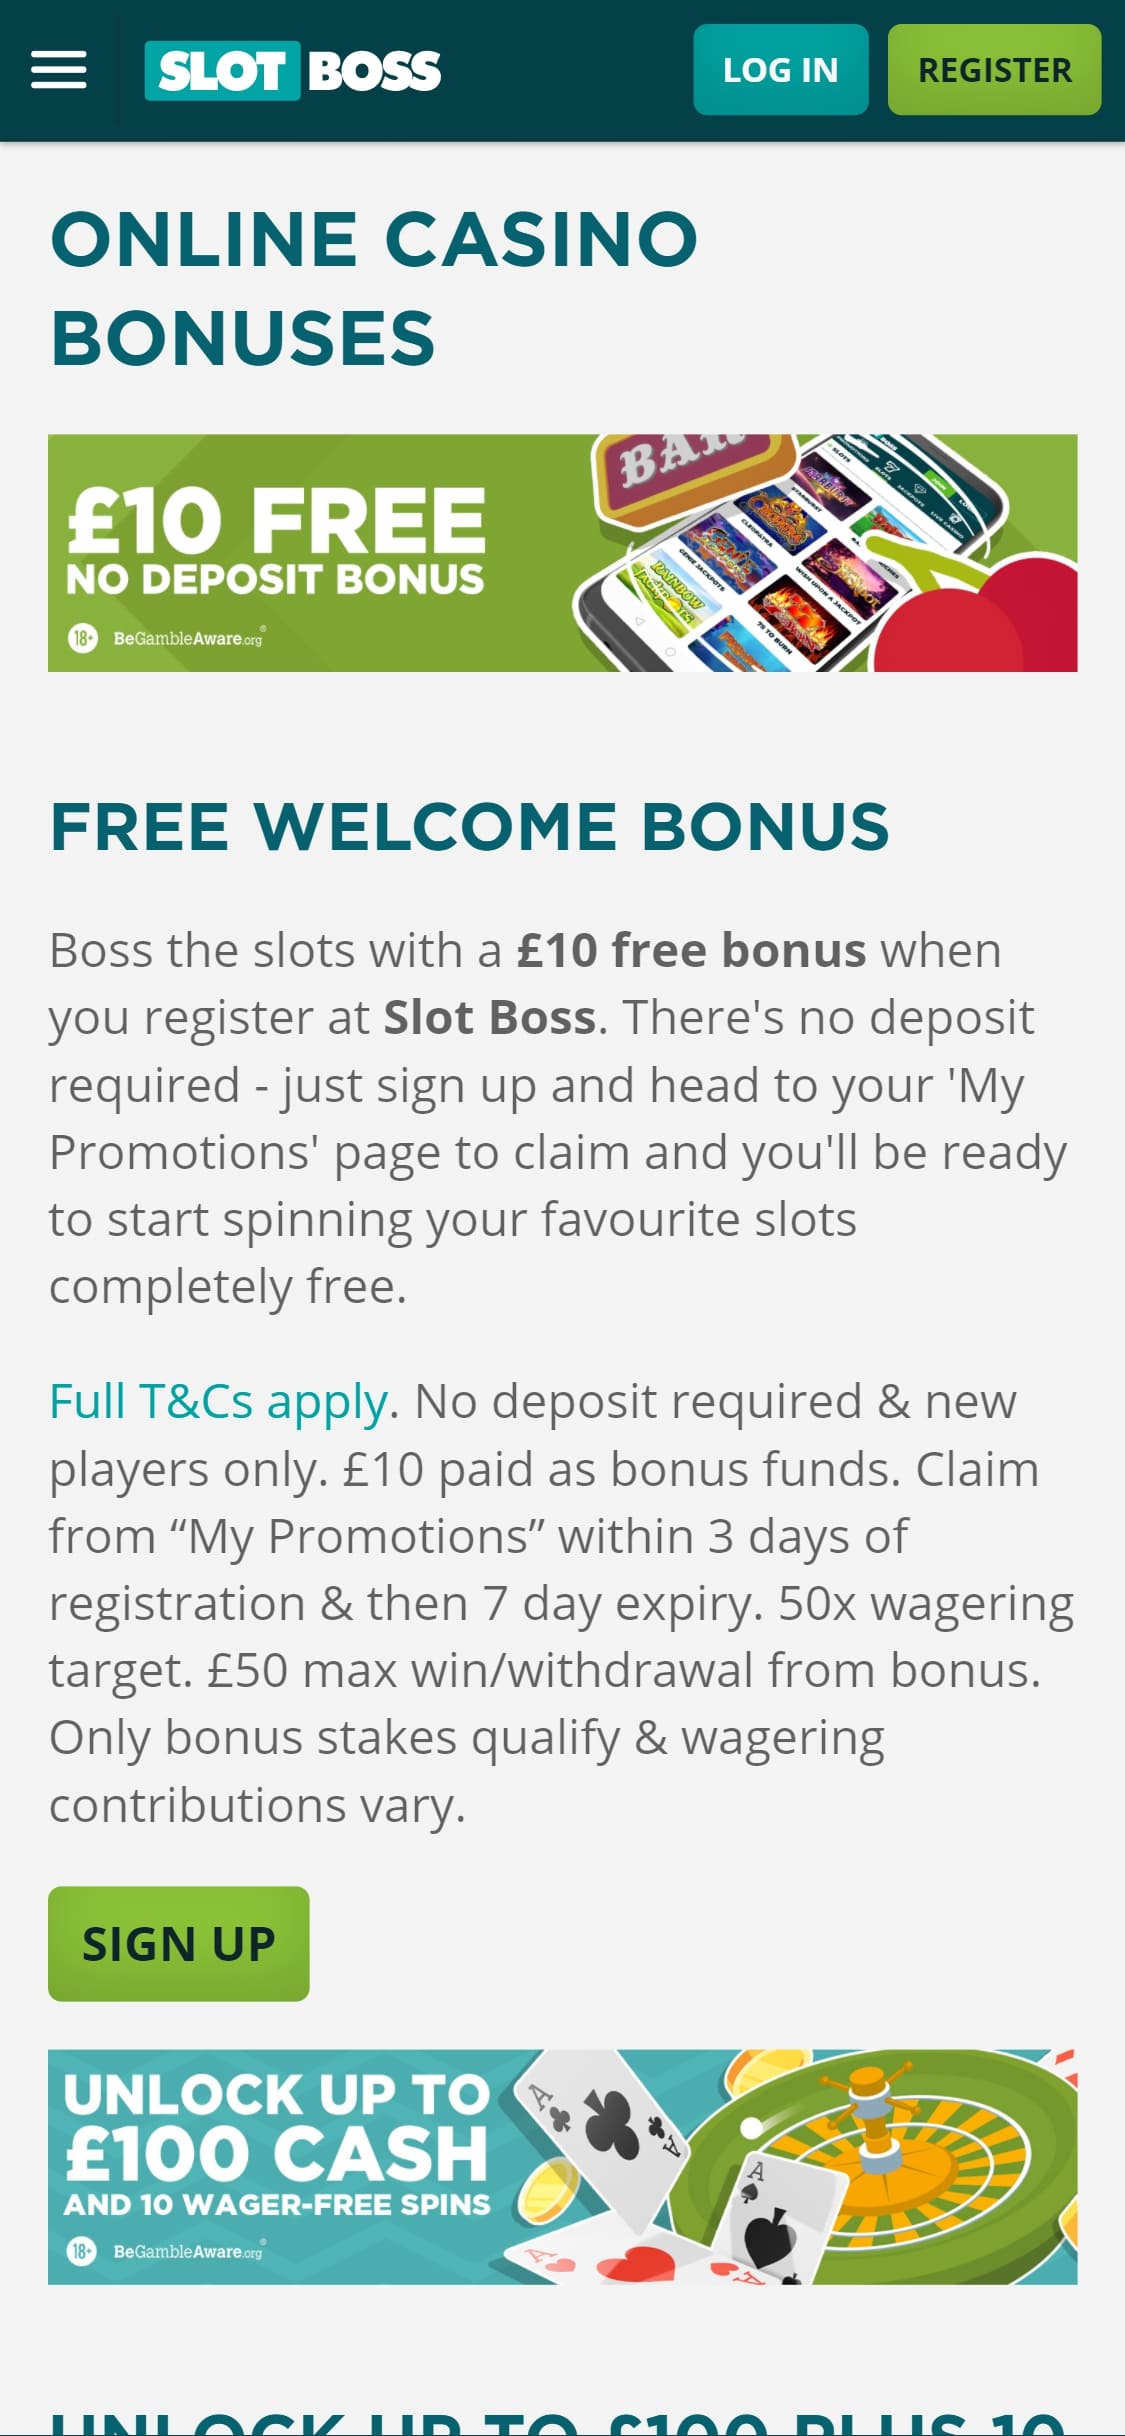 Slot Boss Casino Mobile No Deposit Bonus Review